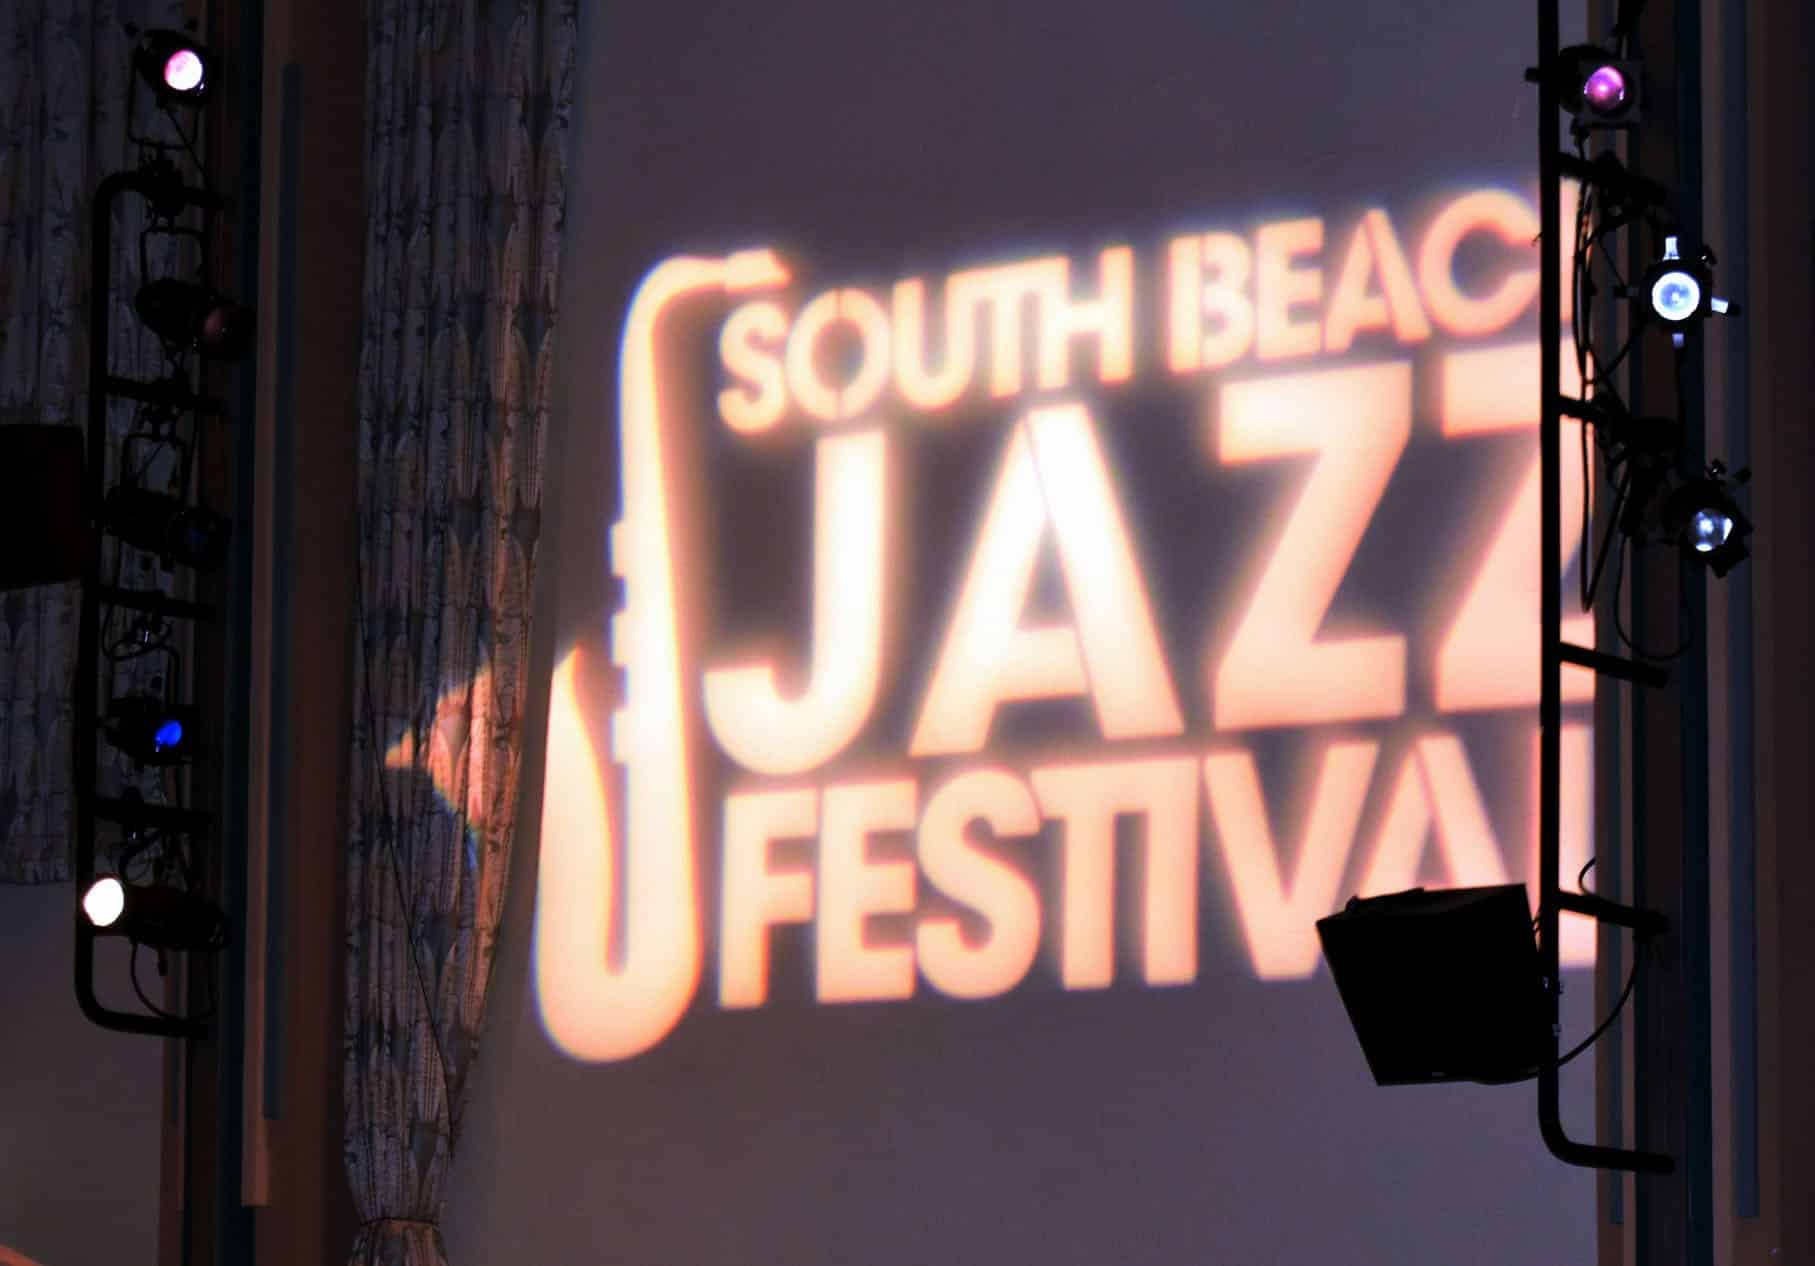 South Beach Jazz Fest